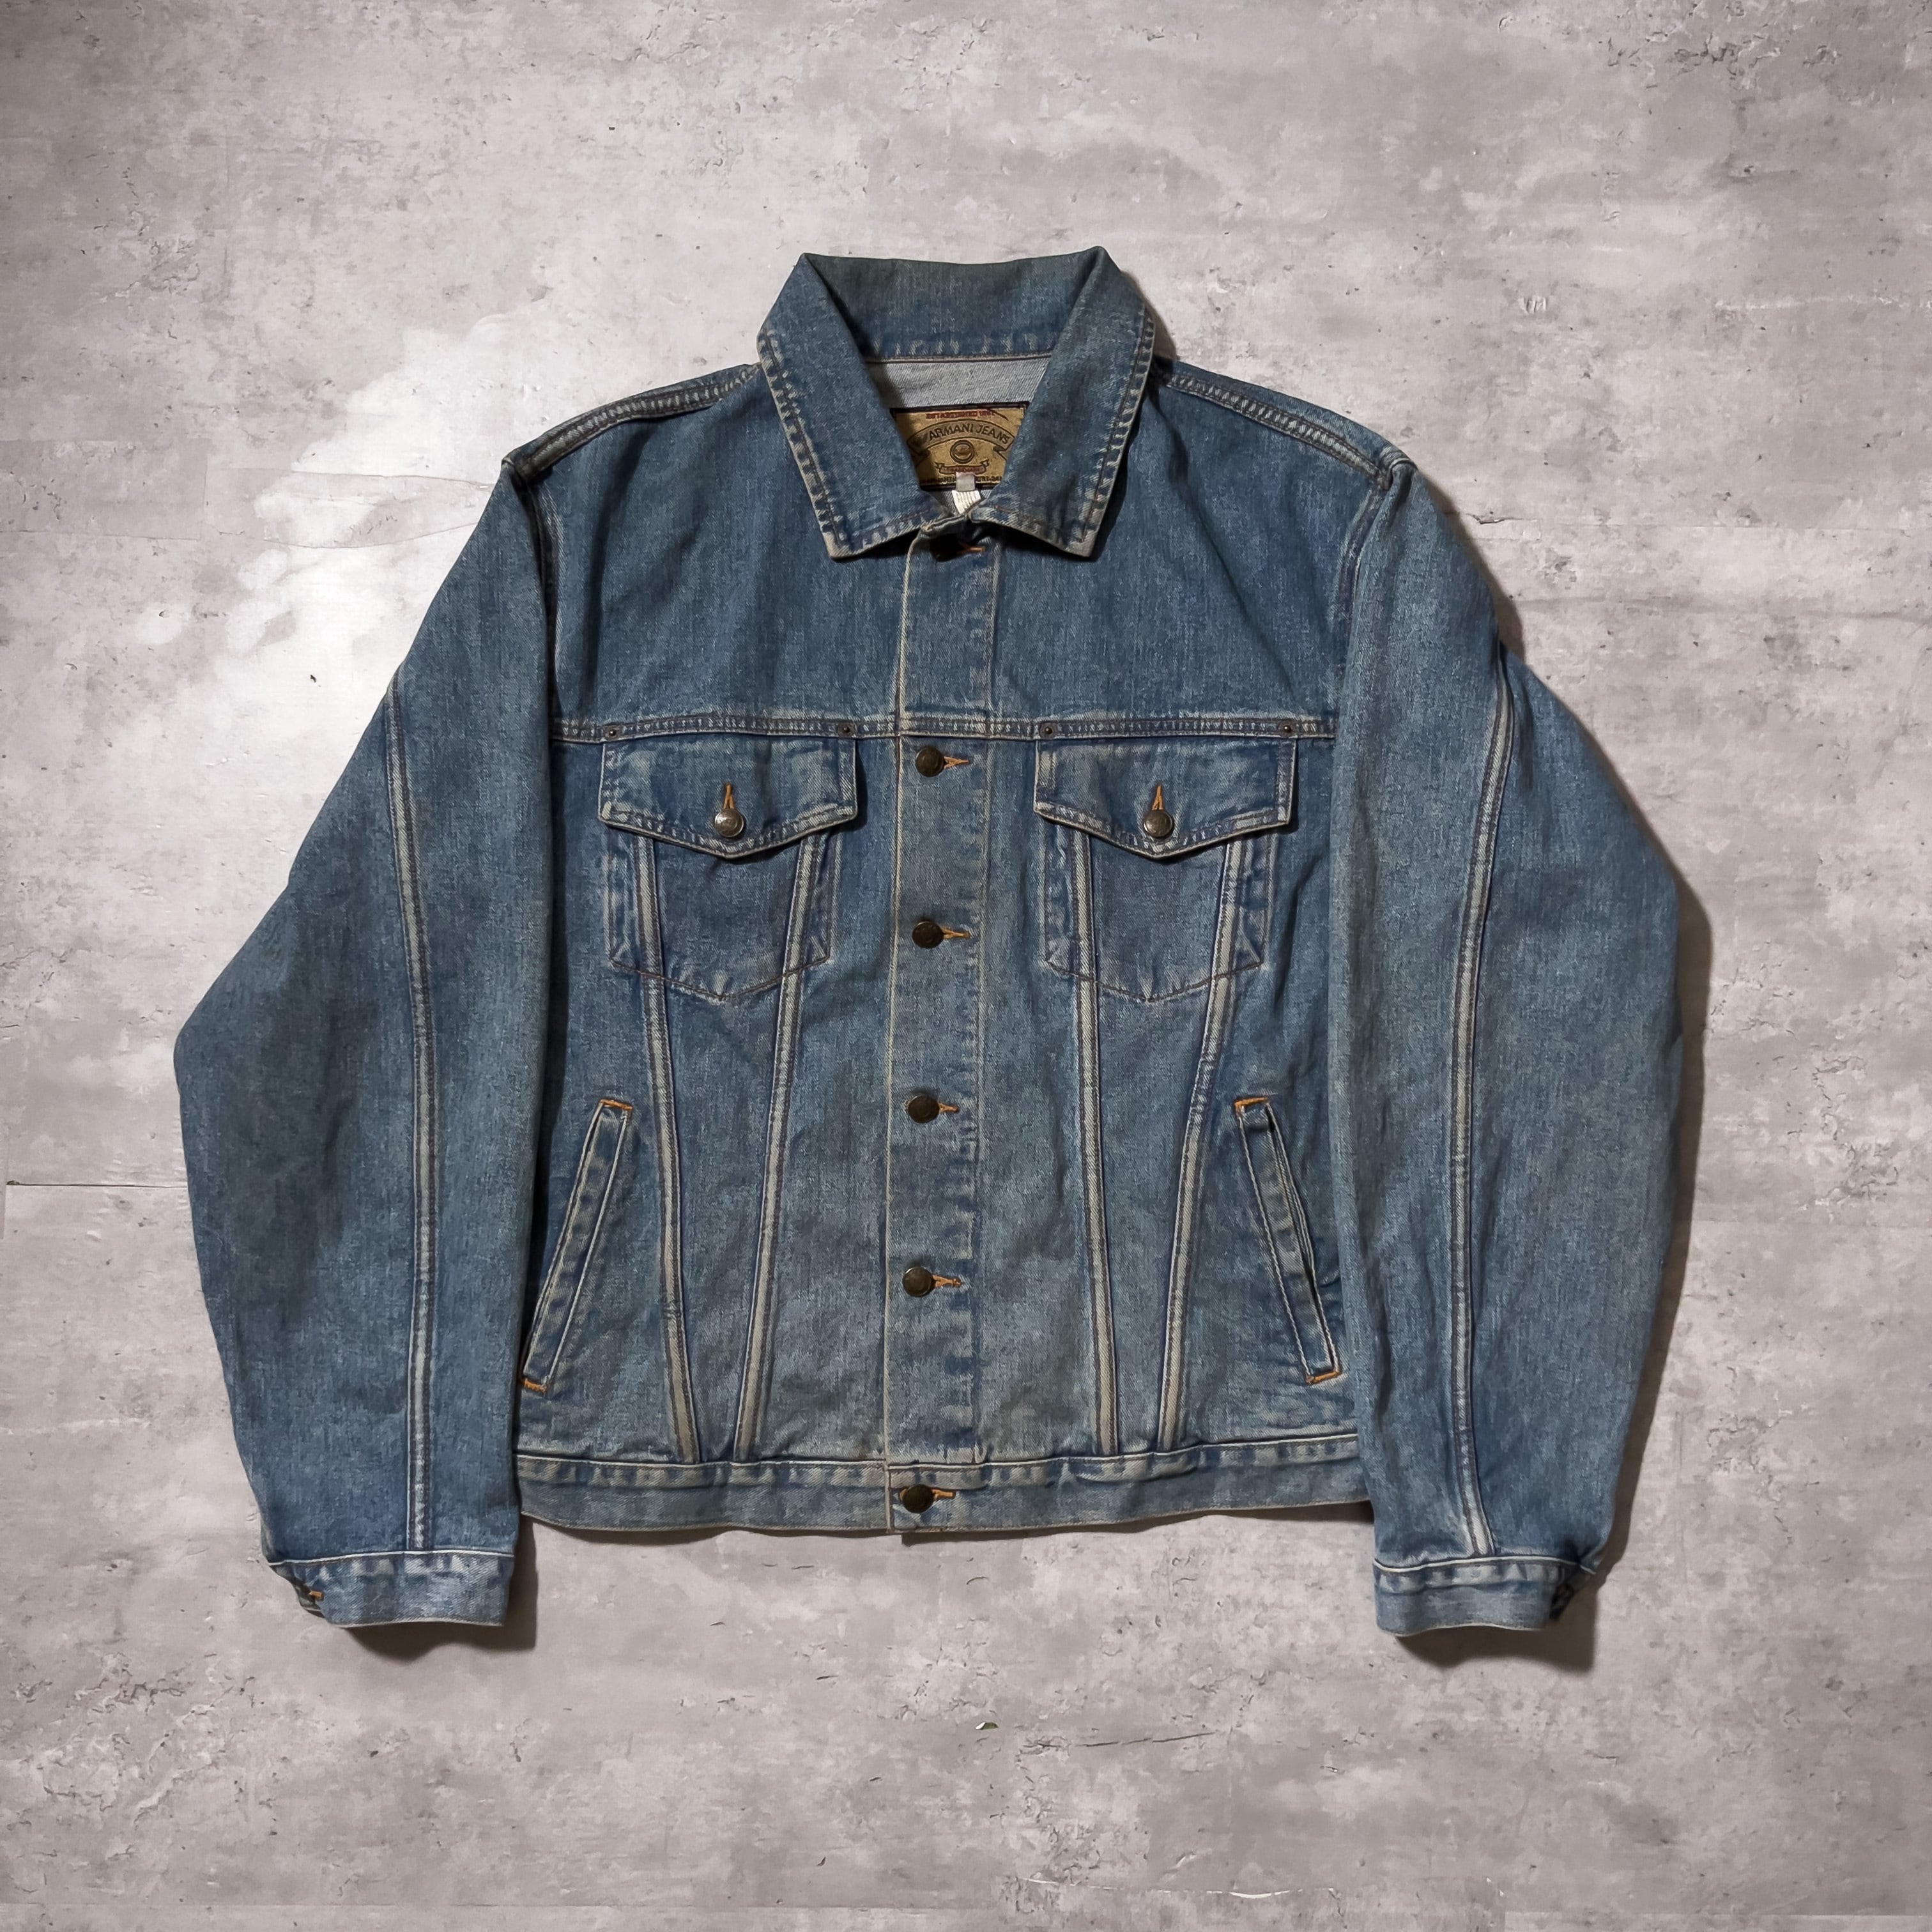 s “ARMANI jeans” denim jacket made in Hong Kong 年代